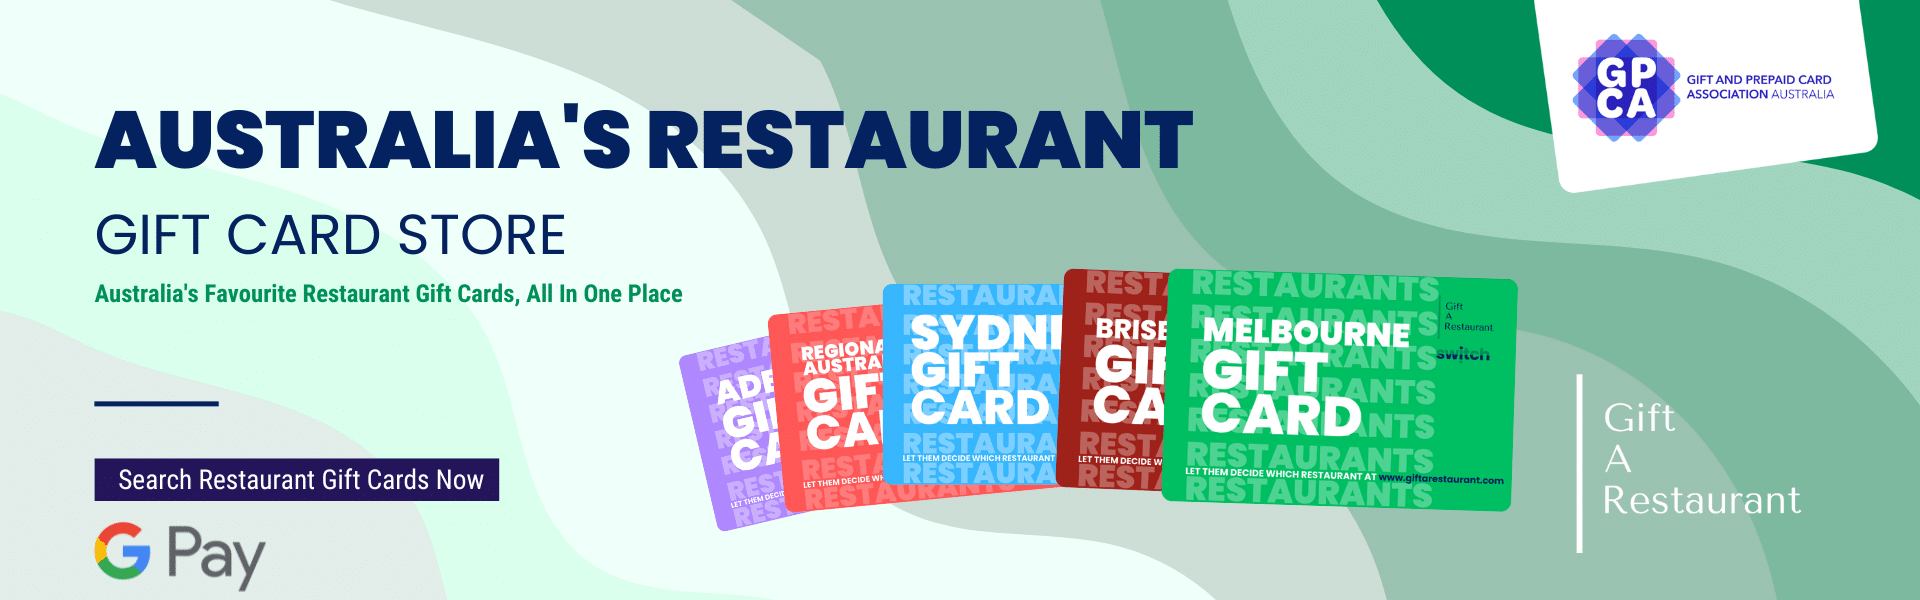 Australia's Restaurant Gift Card Store (5)